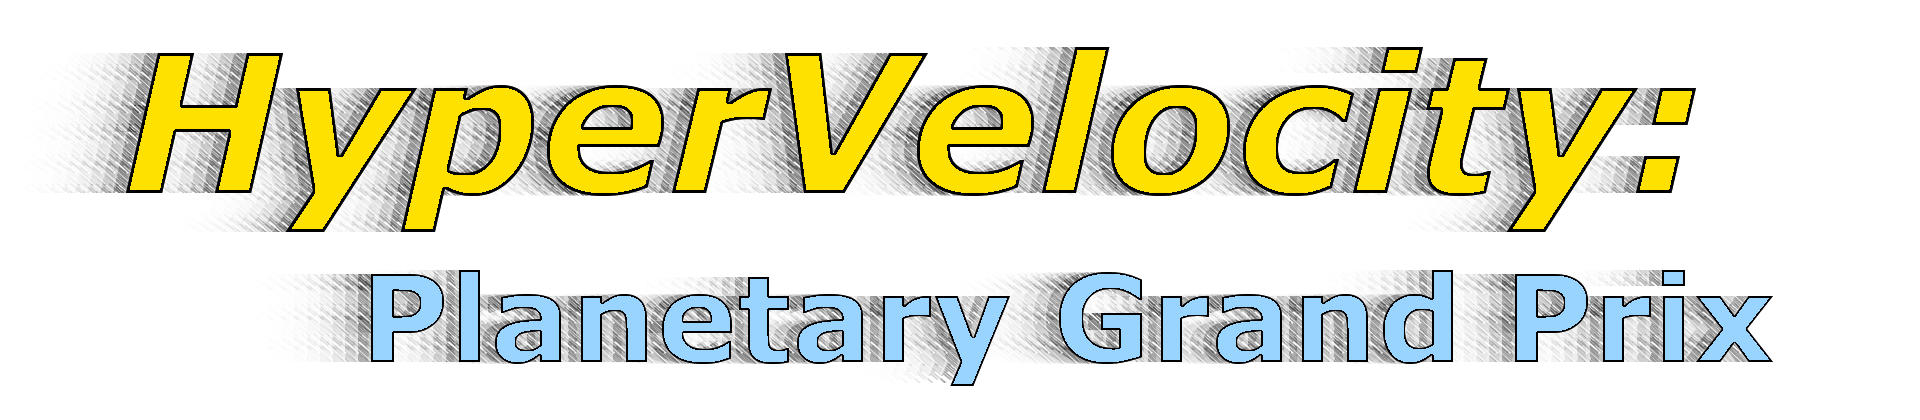 HyperVelocity: Planetary Grand Prix